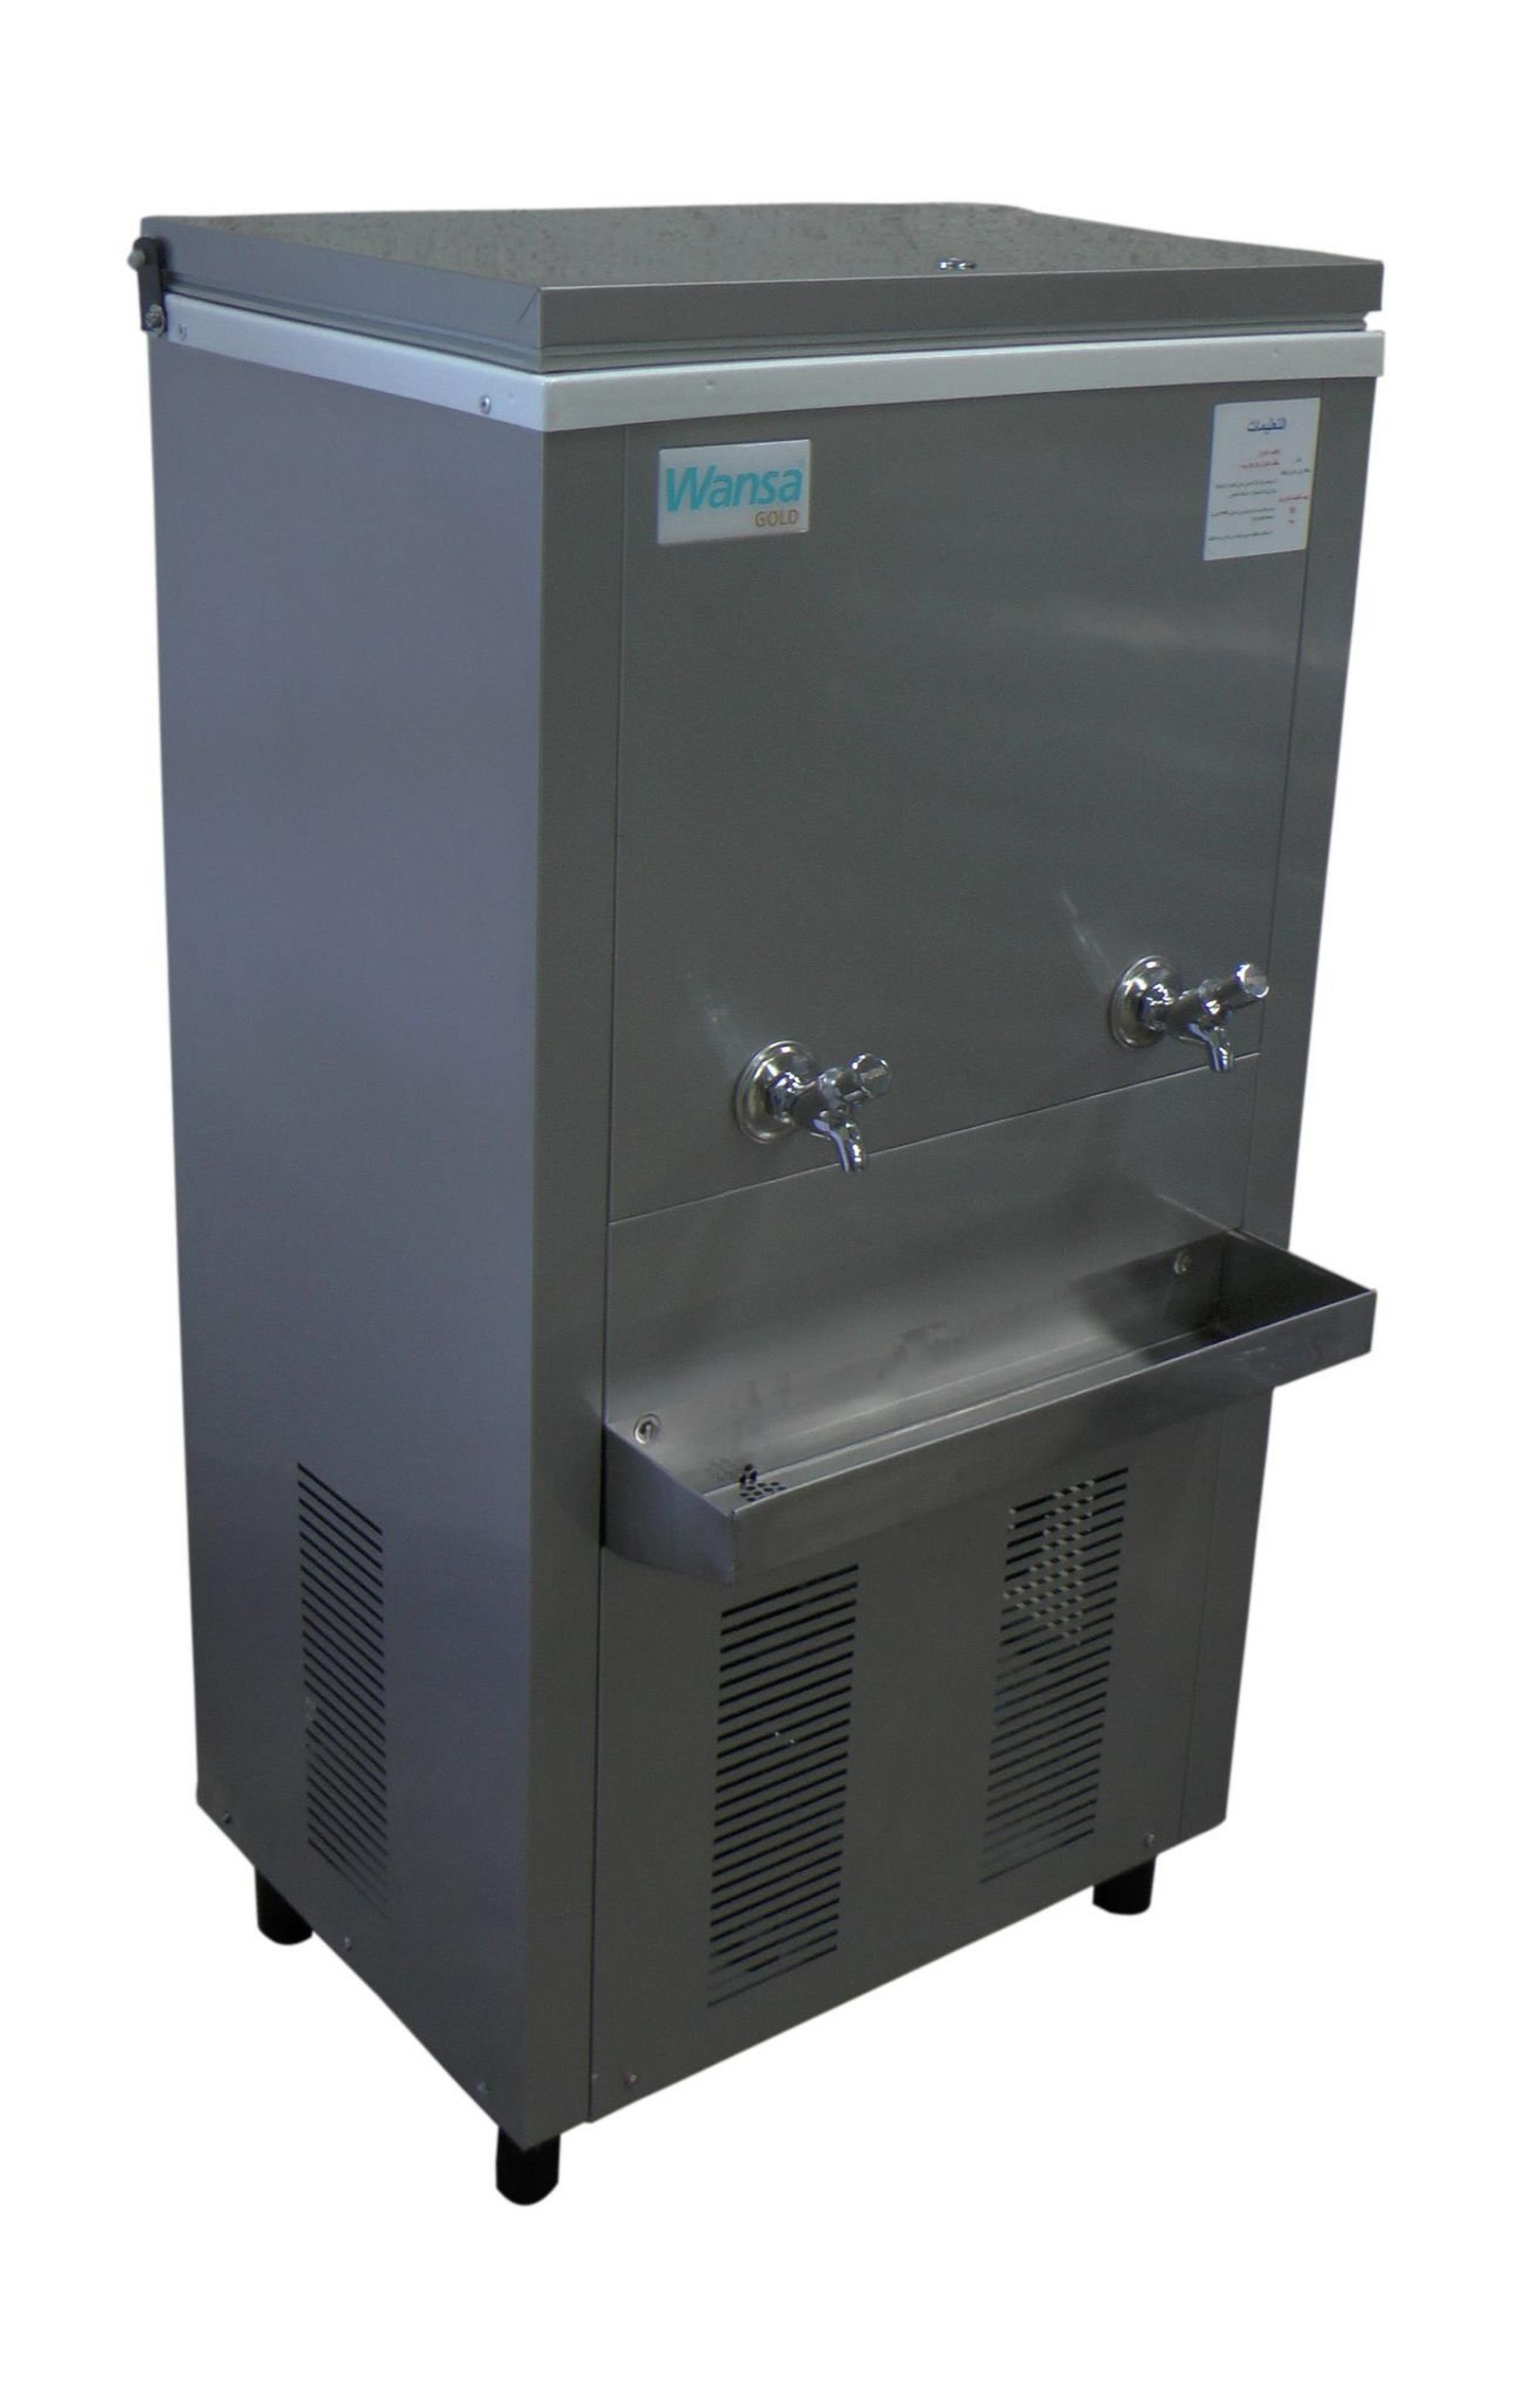 Wansa Gold Open Top Floor Standing Water Cooler 150 Liters (WGWC 150.3) - Silver